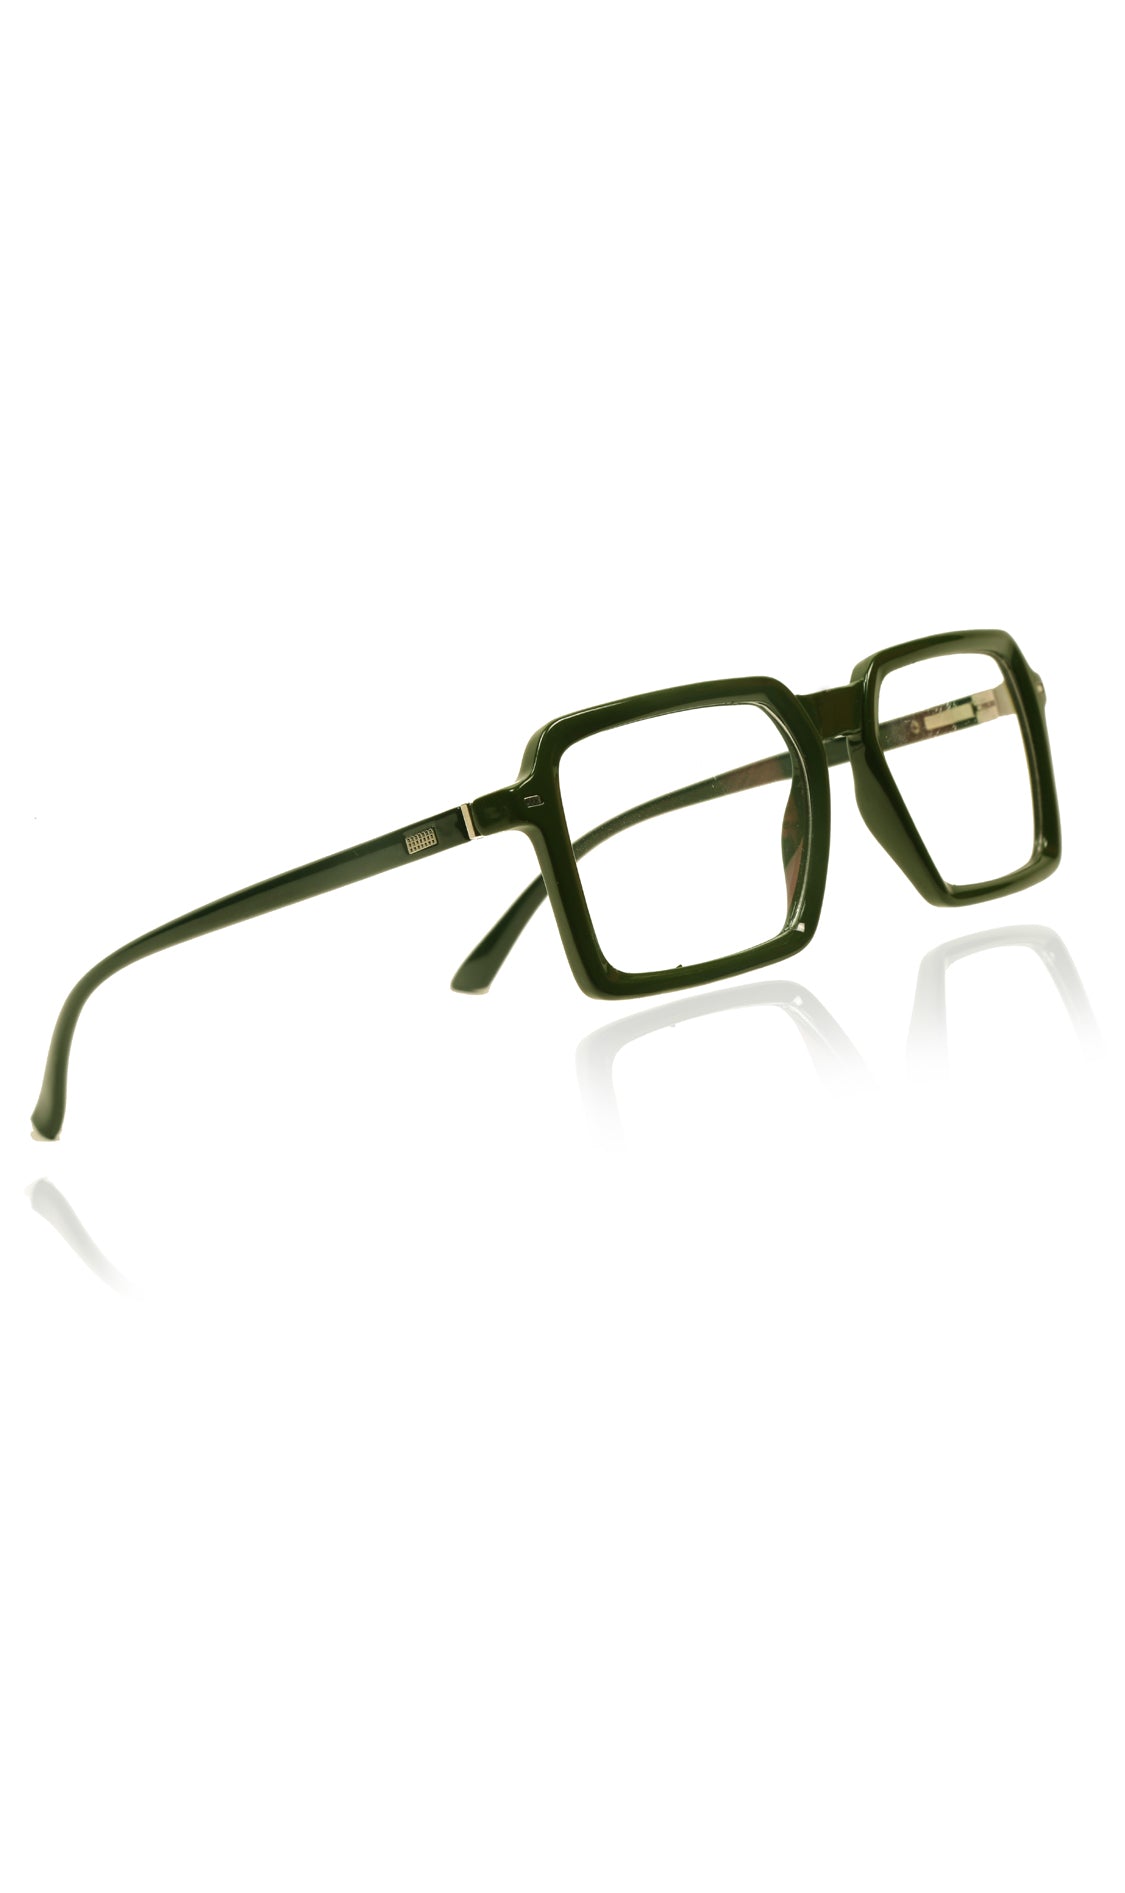 Jodykoes® Colour Frame Series Eyewears | Blue Rays Protection Square Stylish Spectacles With Anti Glare Eyeglasses For Men and Women Eyewears (Leaf green) - Jodykoes ®